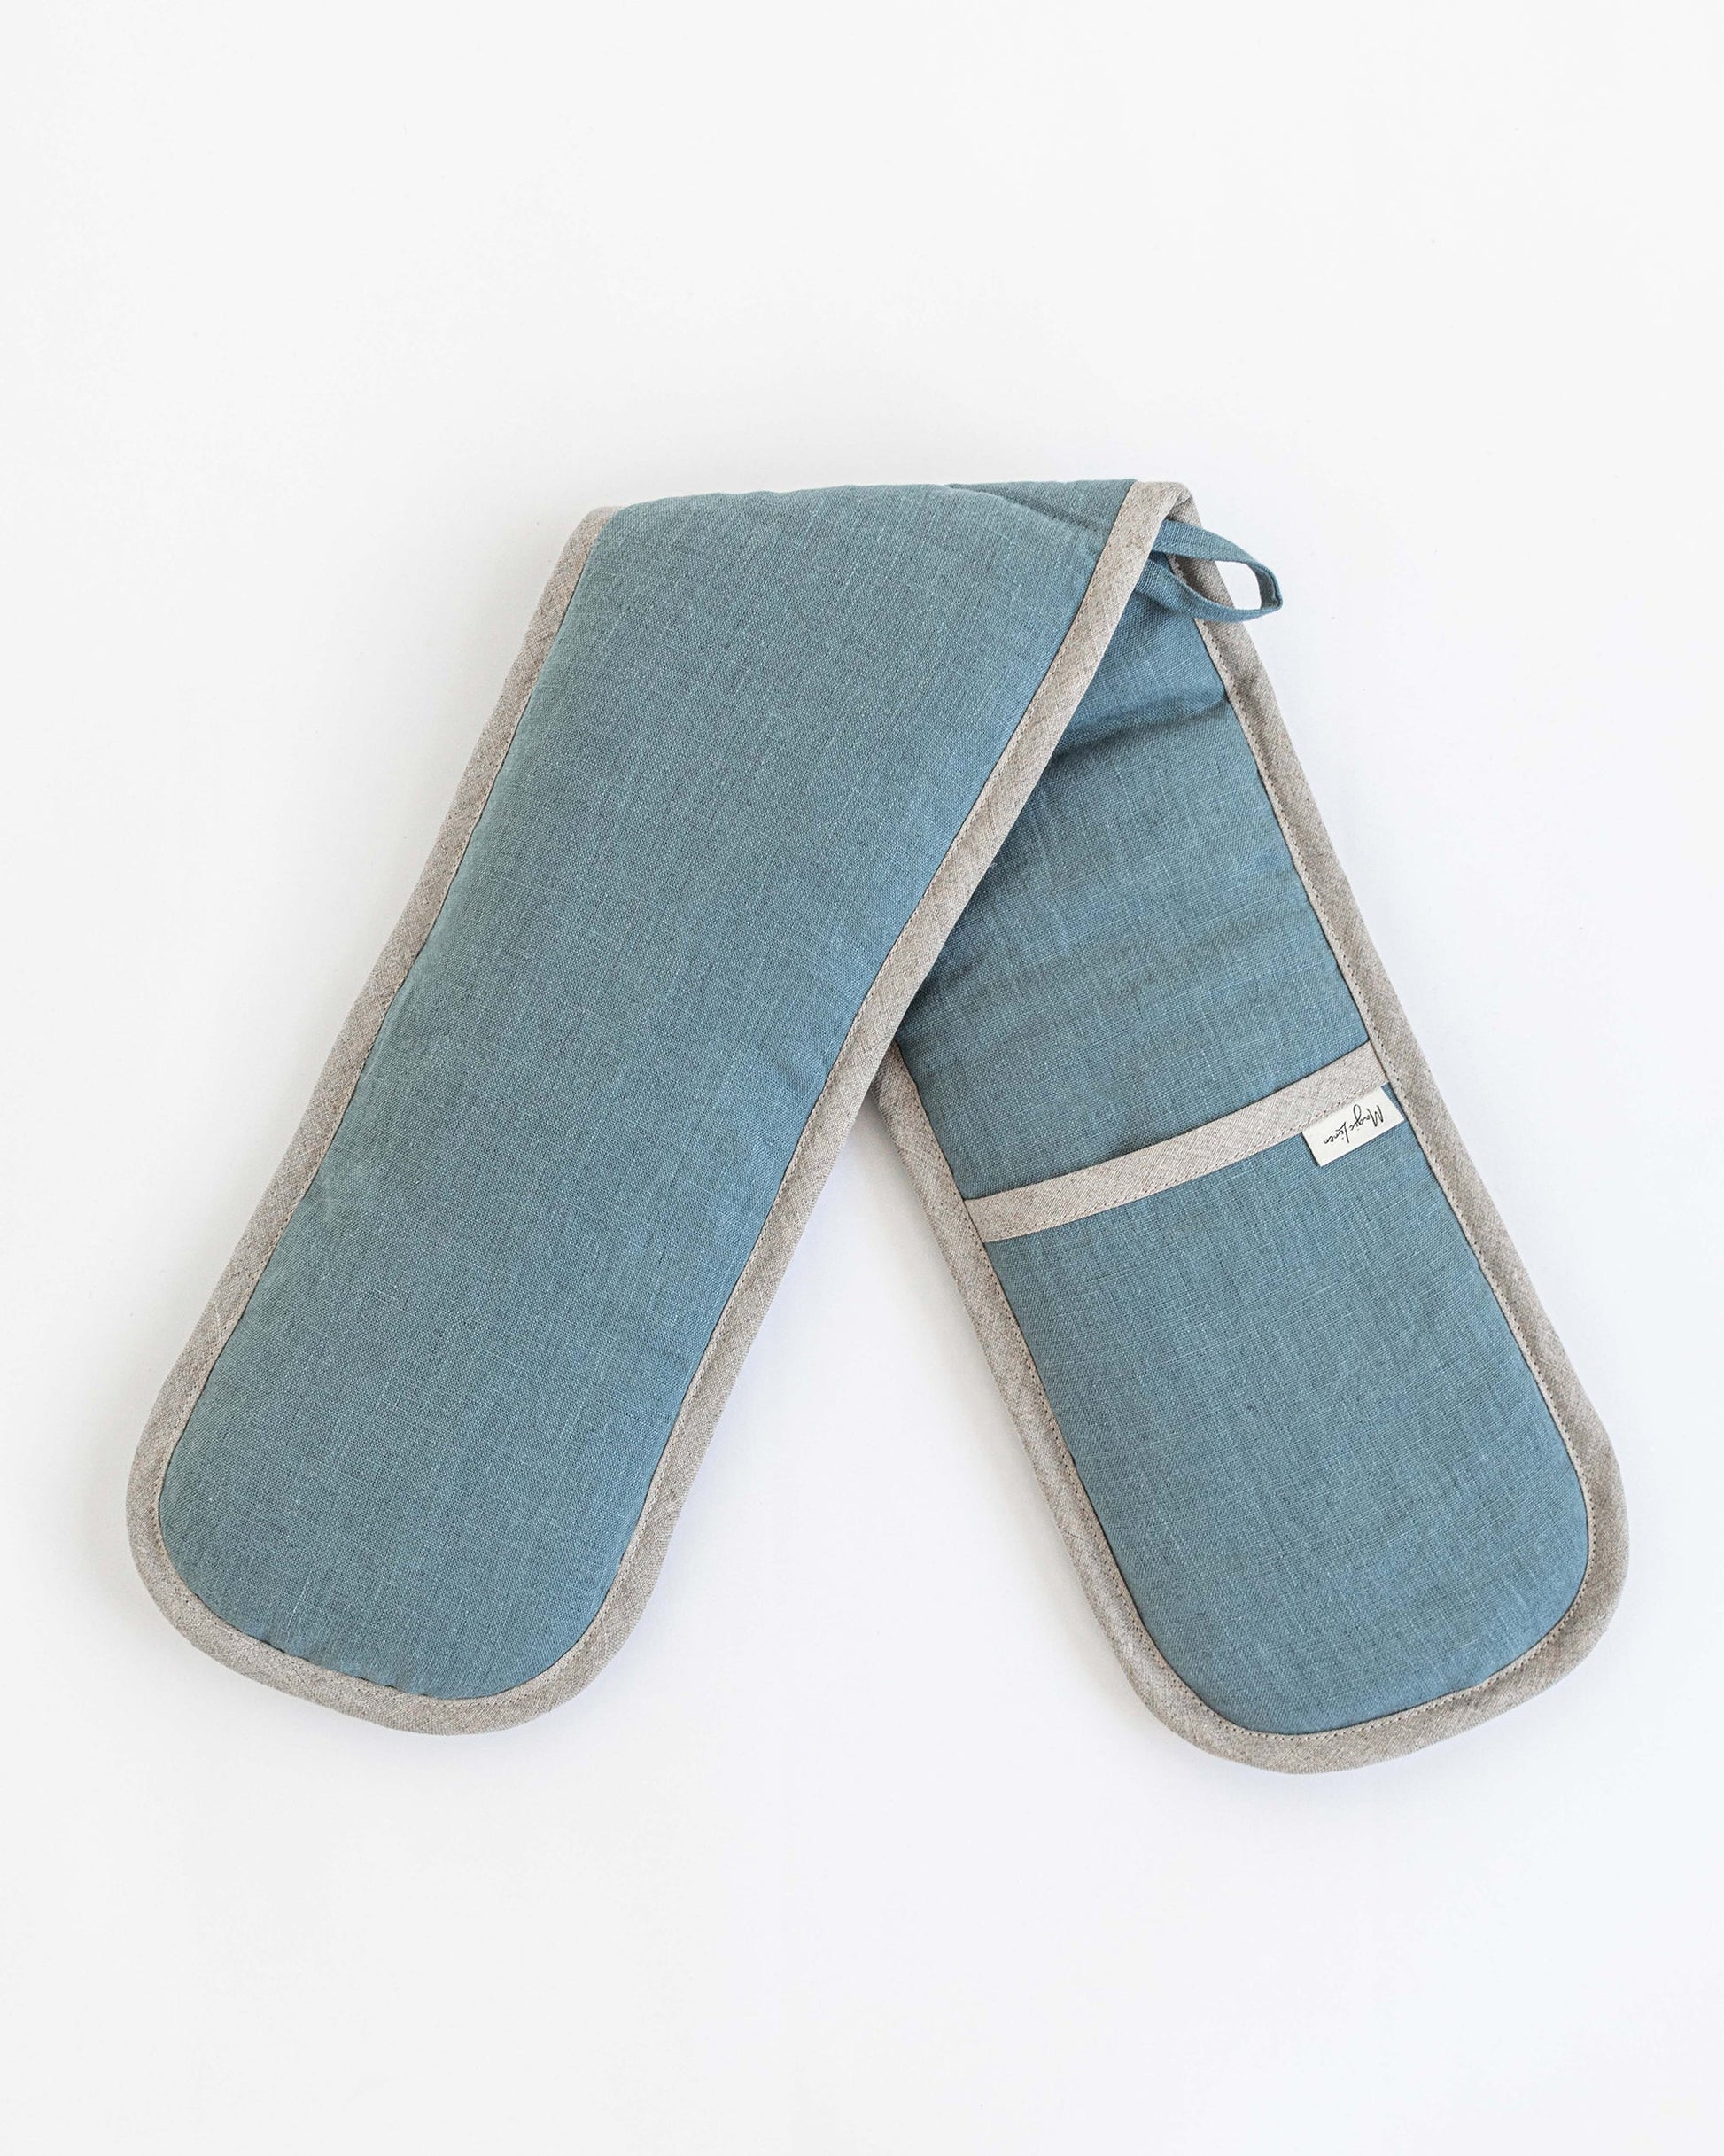 Double oven mitt (1 pcs) in Gray blue - MagicLinen